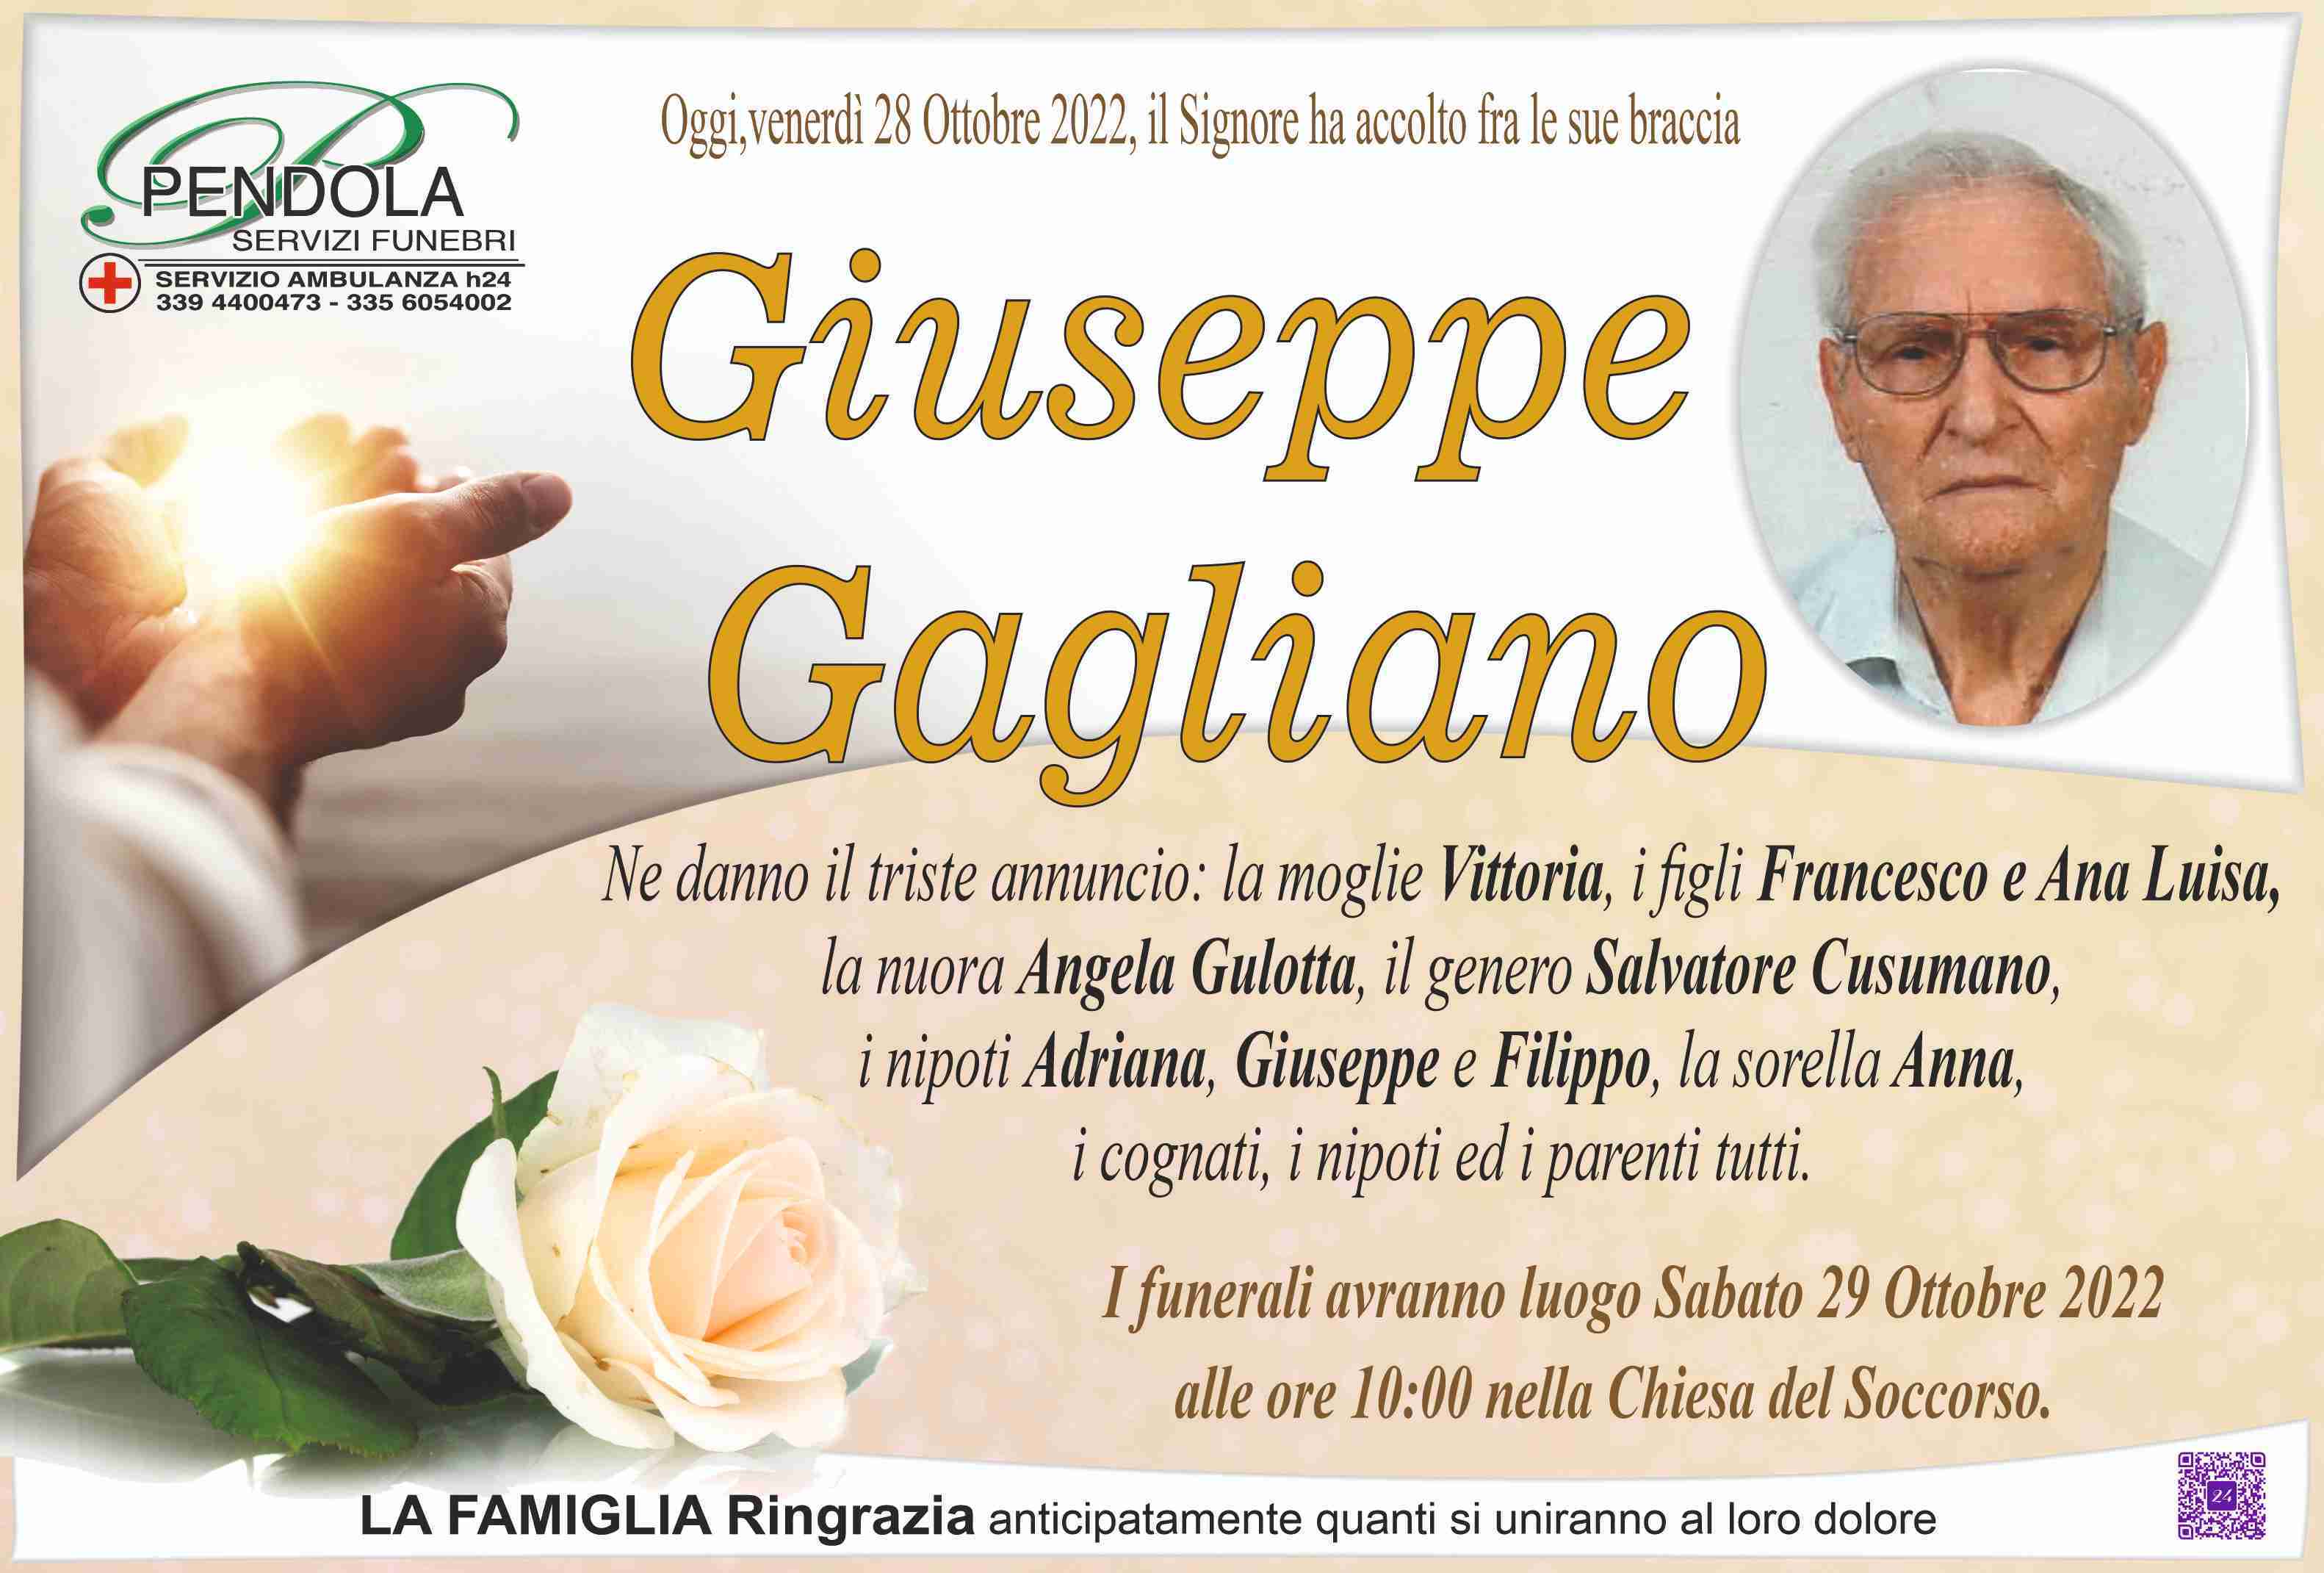 Giuseppe Gagliano